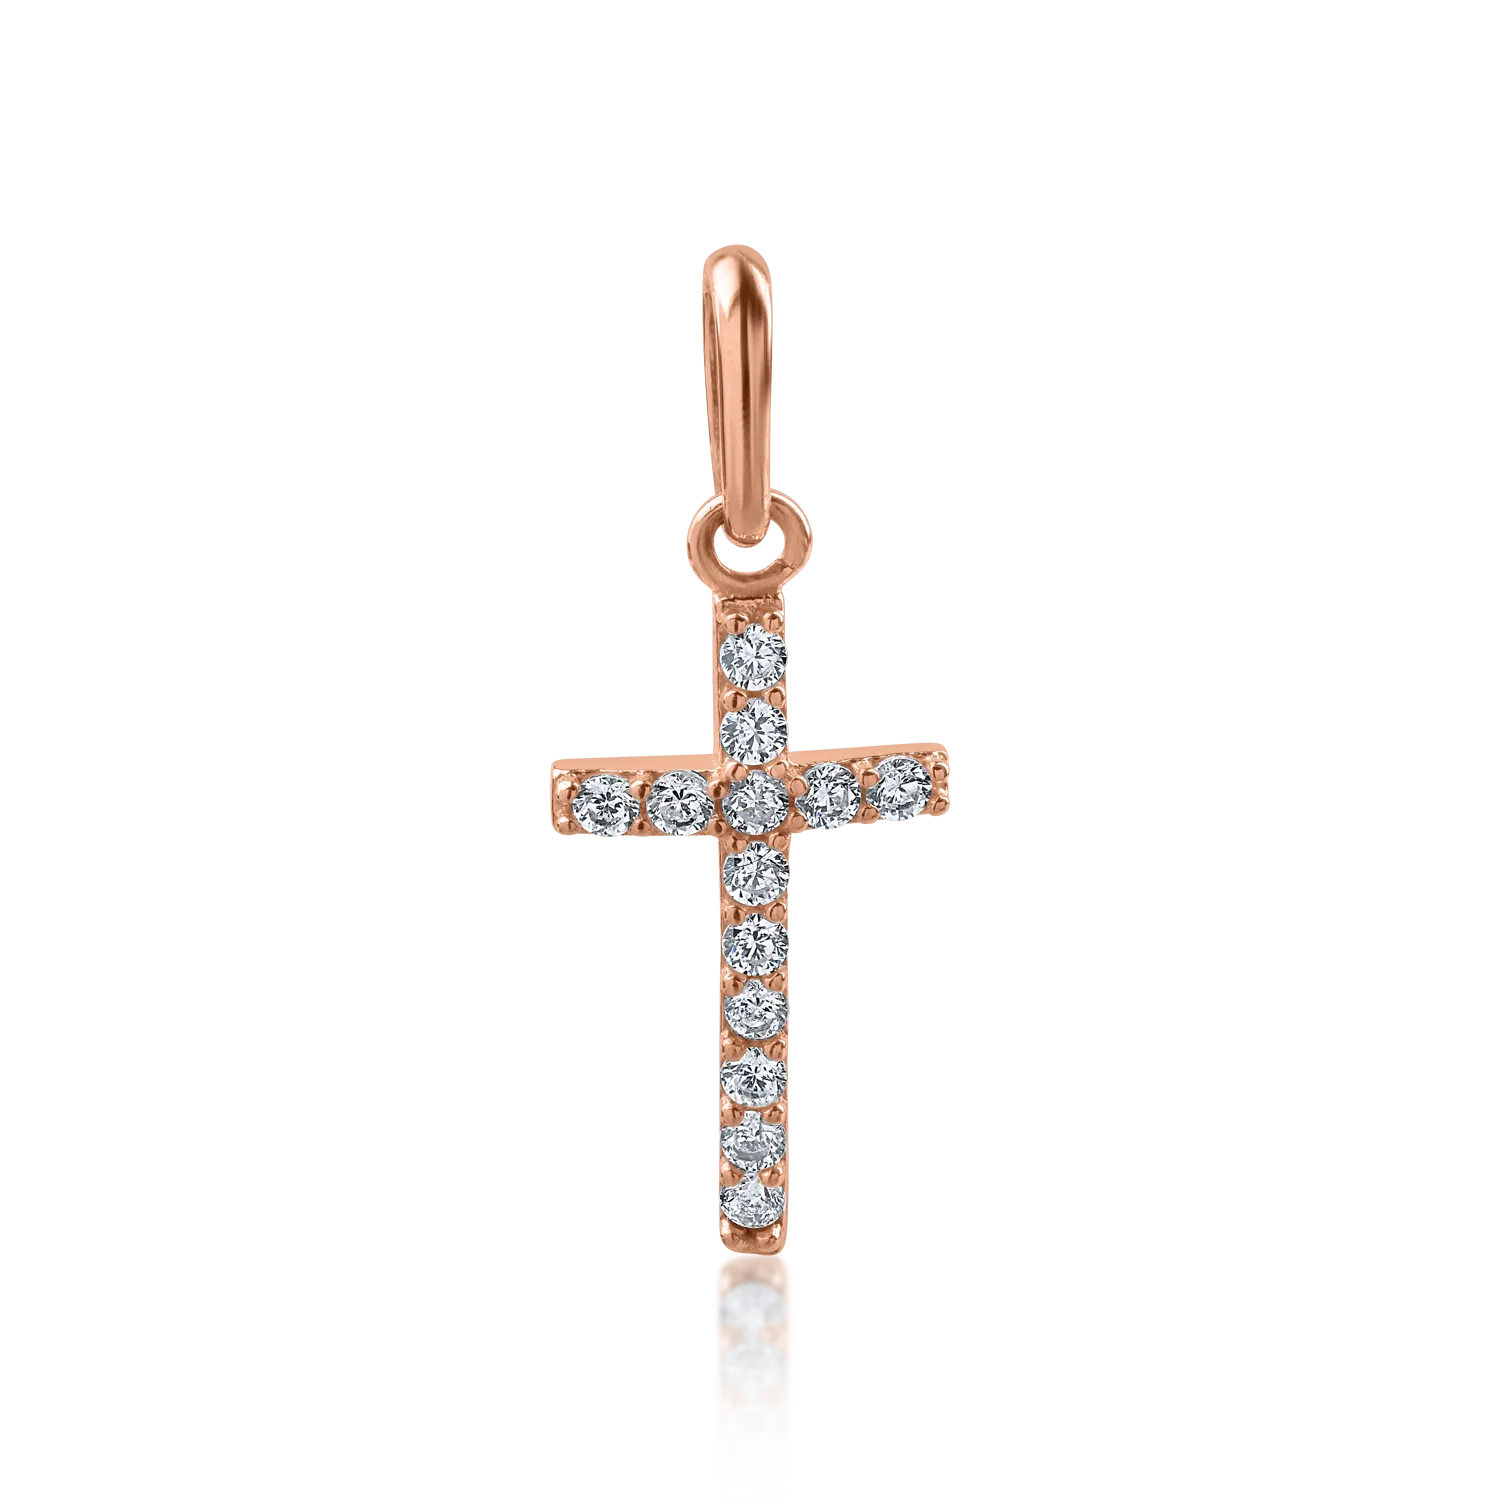 Rose gold cross pendant